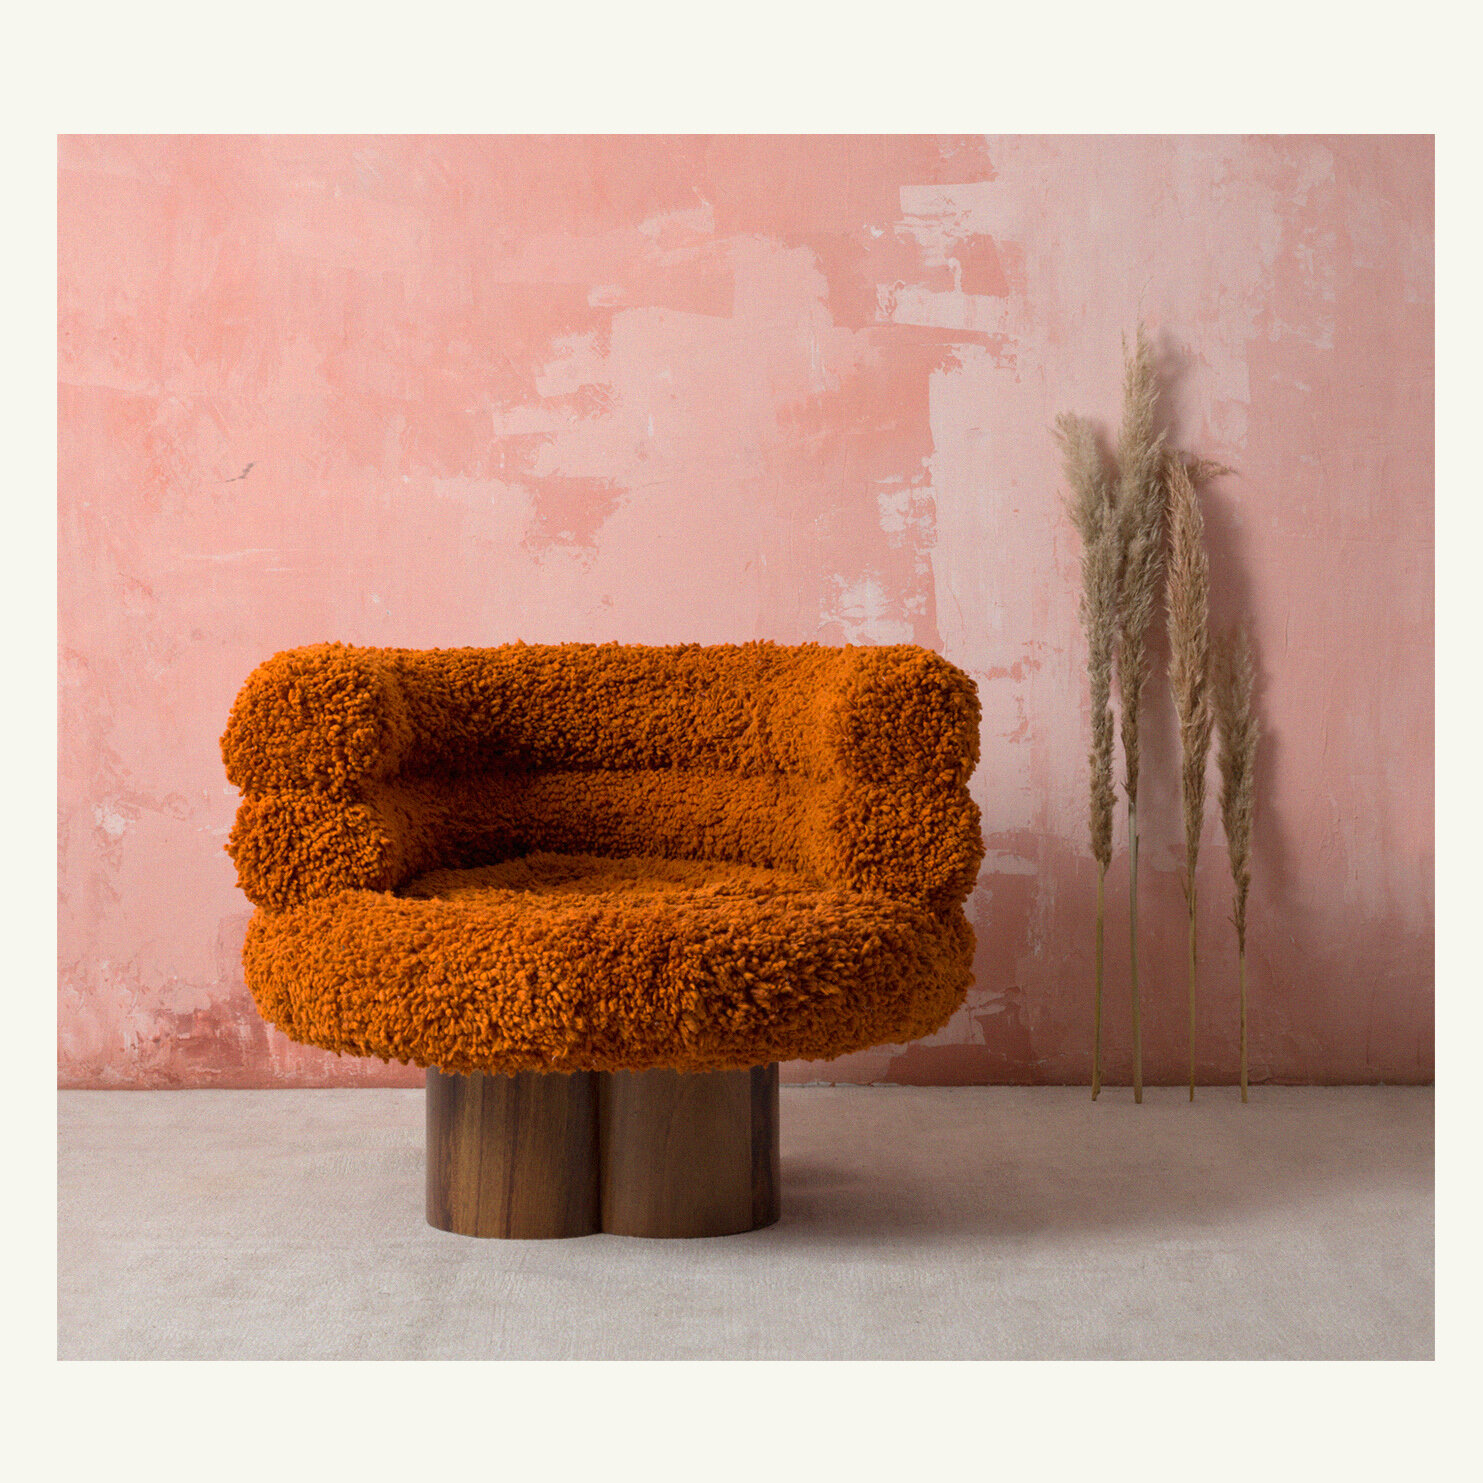 Lana Chair Zapote x Ago Projects .
.
.
.
.
#agnesstudio.co #agoprojects #lanachair #zapotelanachair#wool #Design #latinaamerica #guatemala #artisan #handmade #antiguaguatemala #codicelowcabinet #livingstonecollection #luxuryfurniture #collectibledesi